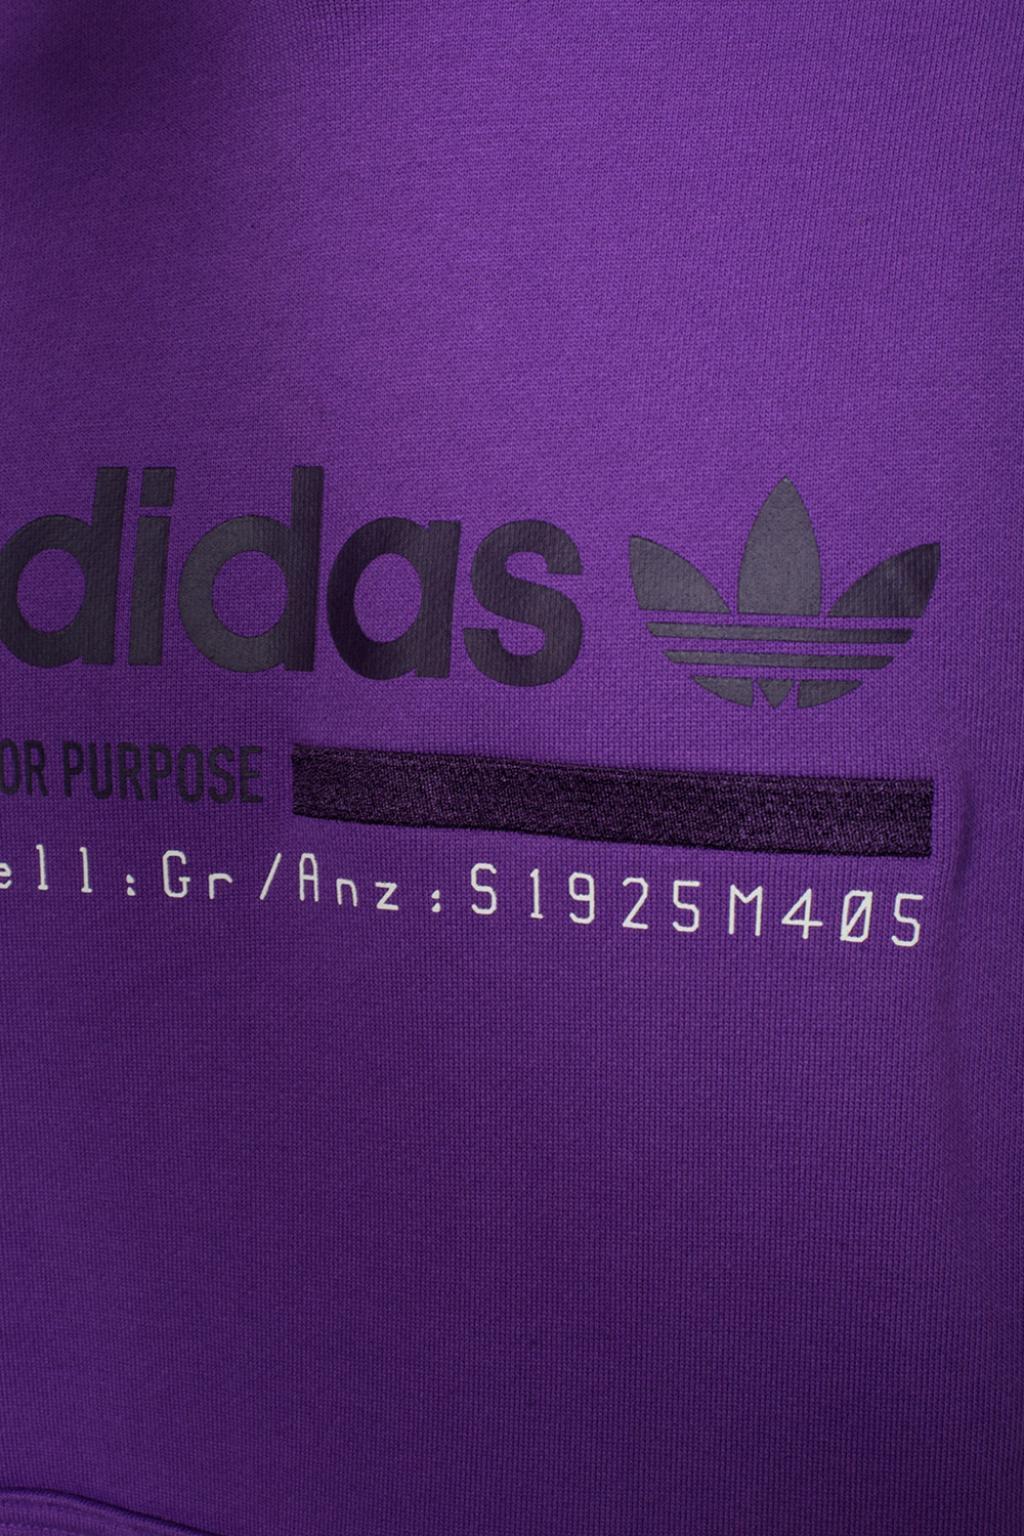 Adidas Purple Logo - adidas Originals Sweatshirt With Logo Pattern in Purple for Men - Lyst